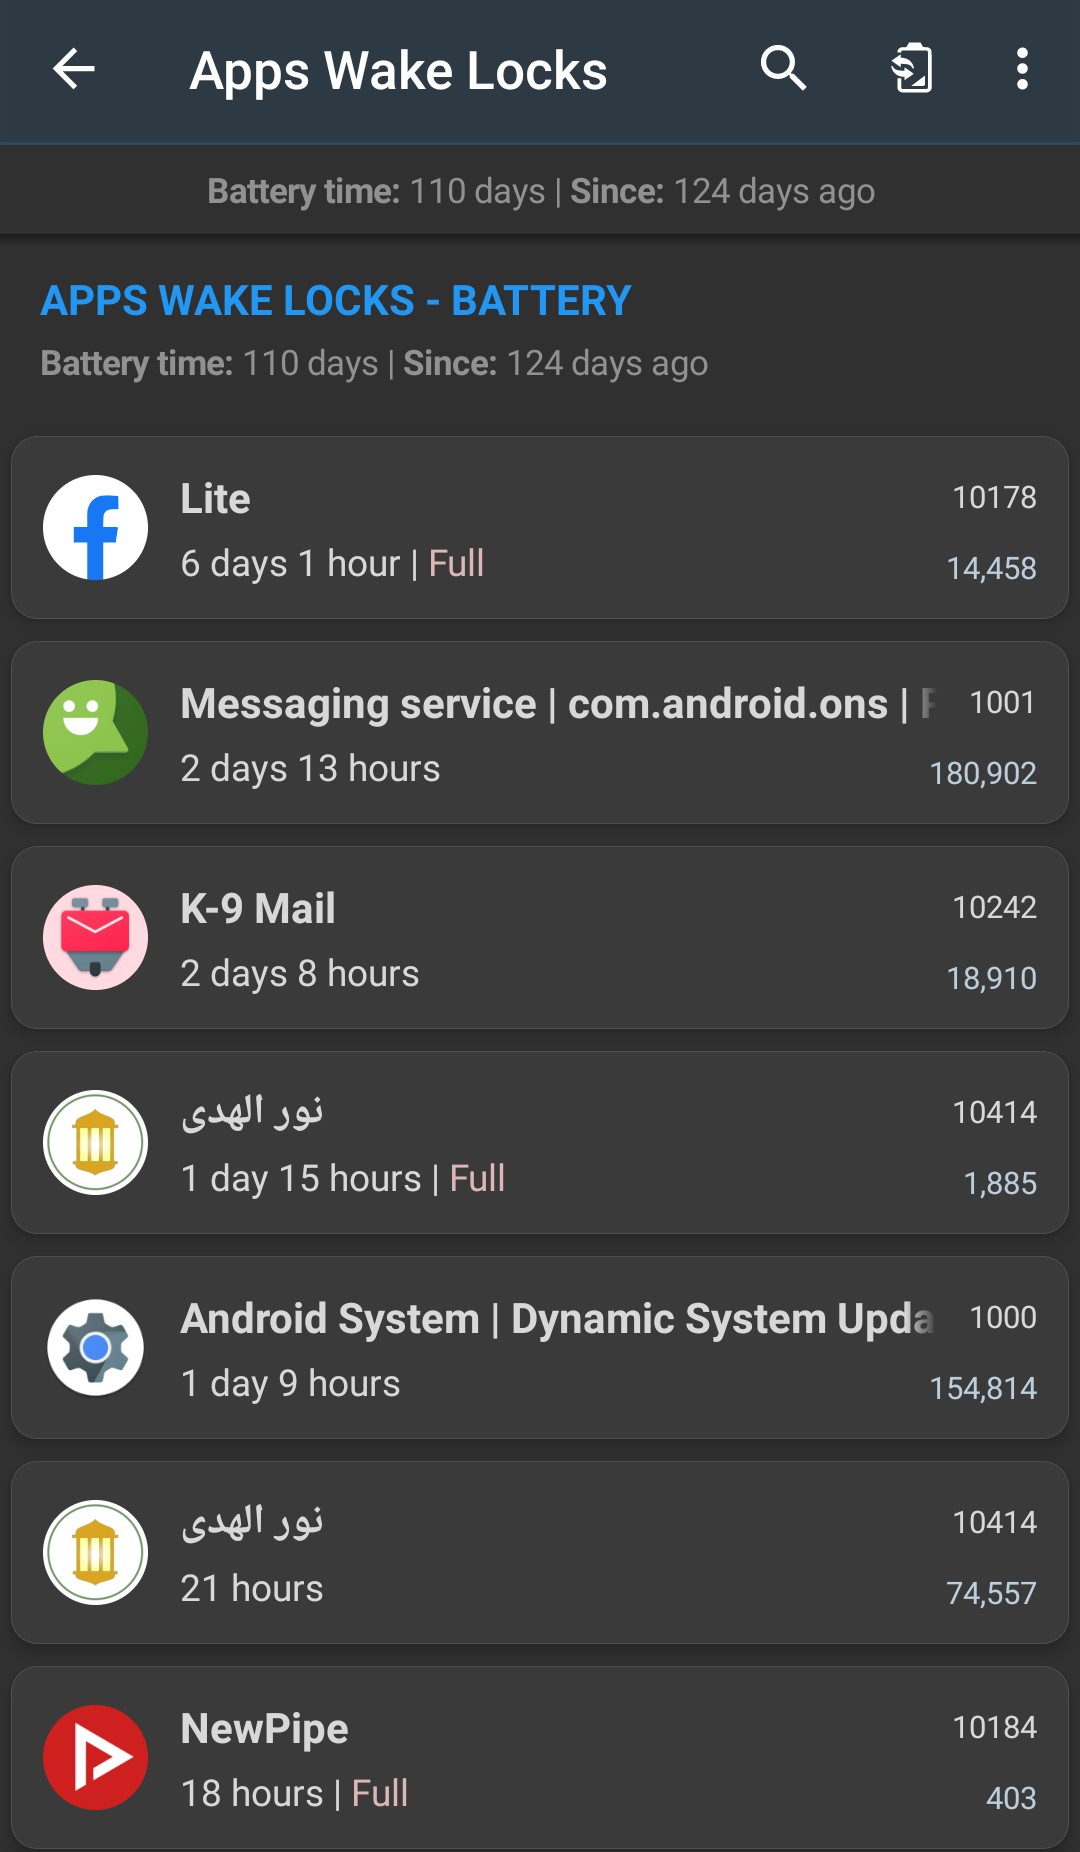 Android wake locks battery